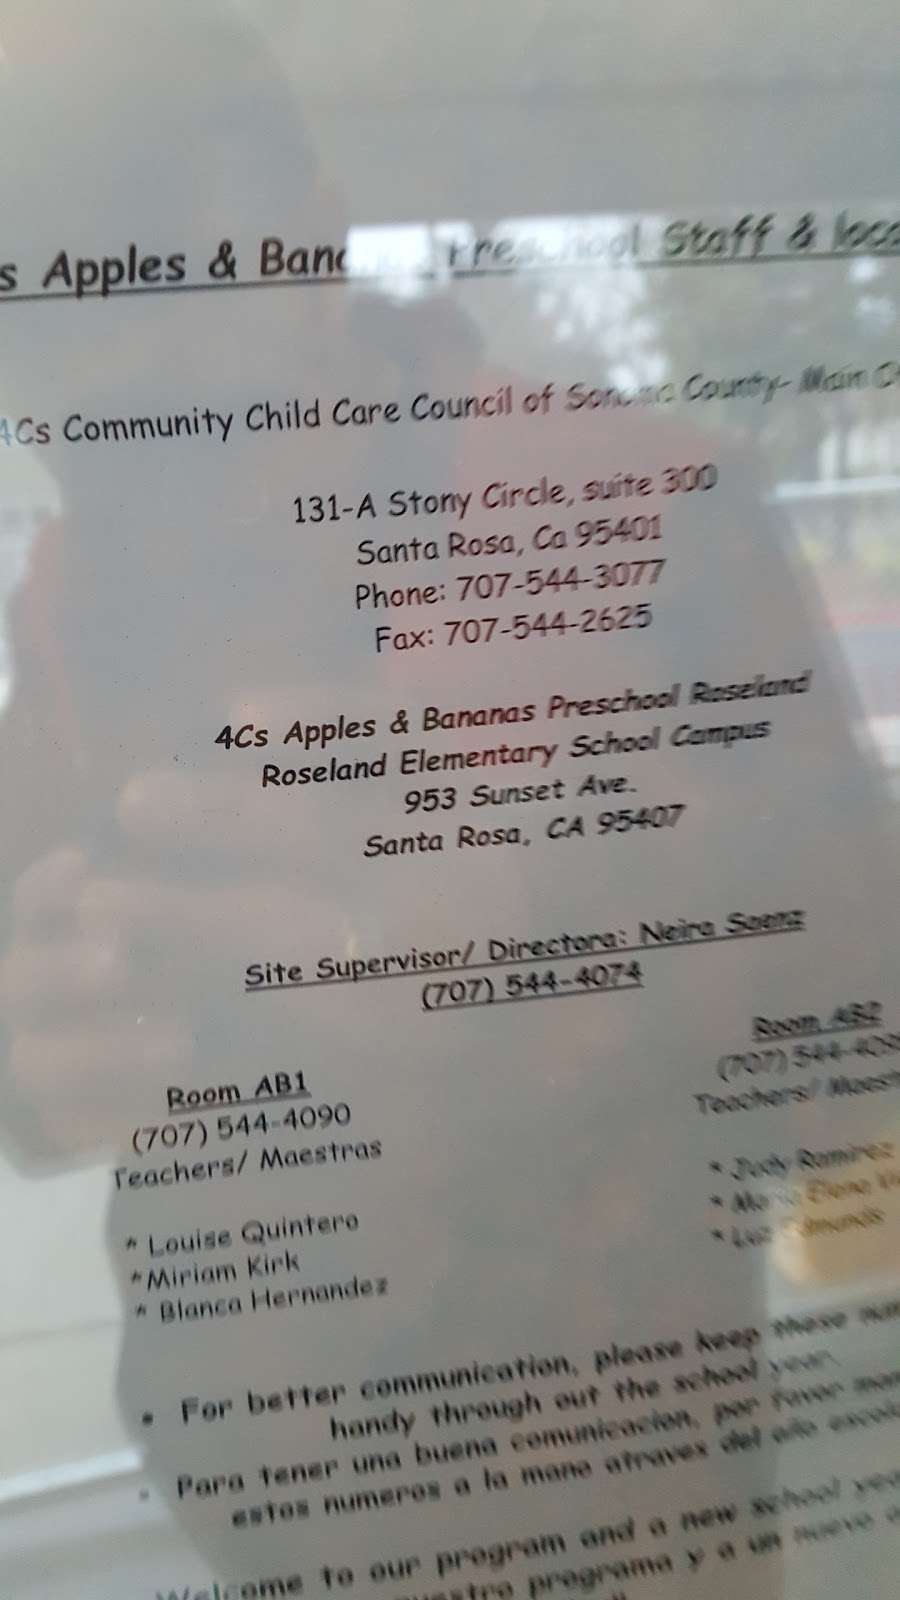 4Cs Apples & Bananas Roseland Pre-school | 953 Sunset Ave, Santa Rosa, CA 95407, USA | Phone: (707) 544-4074